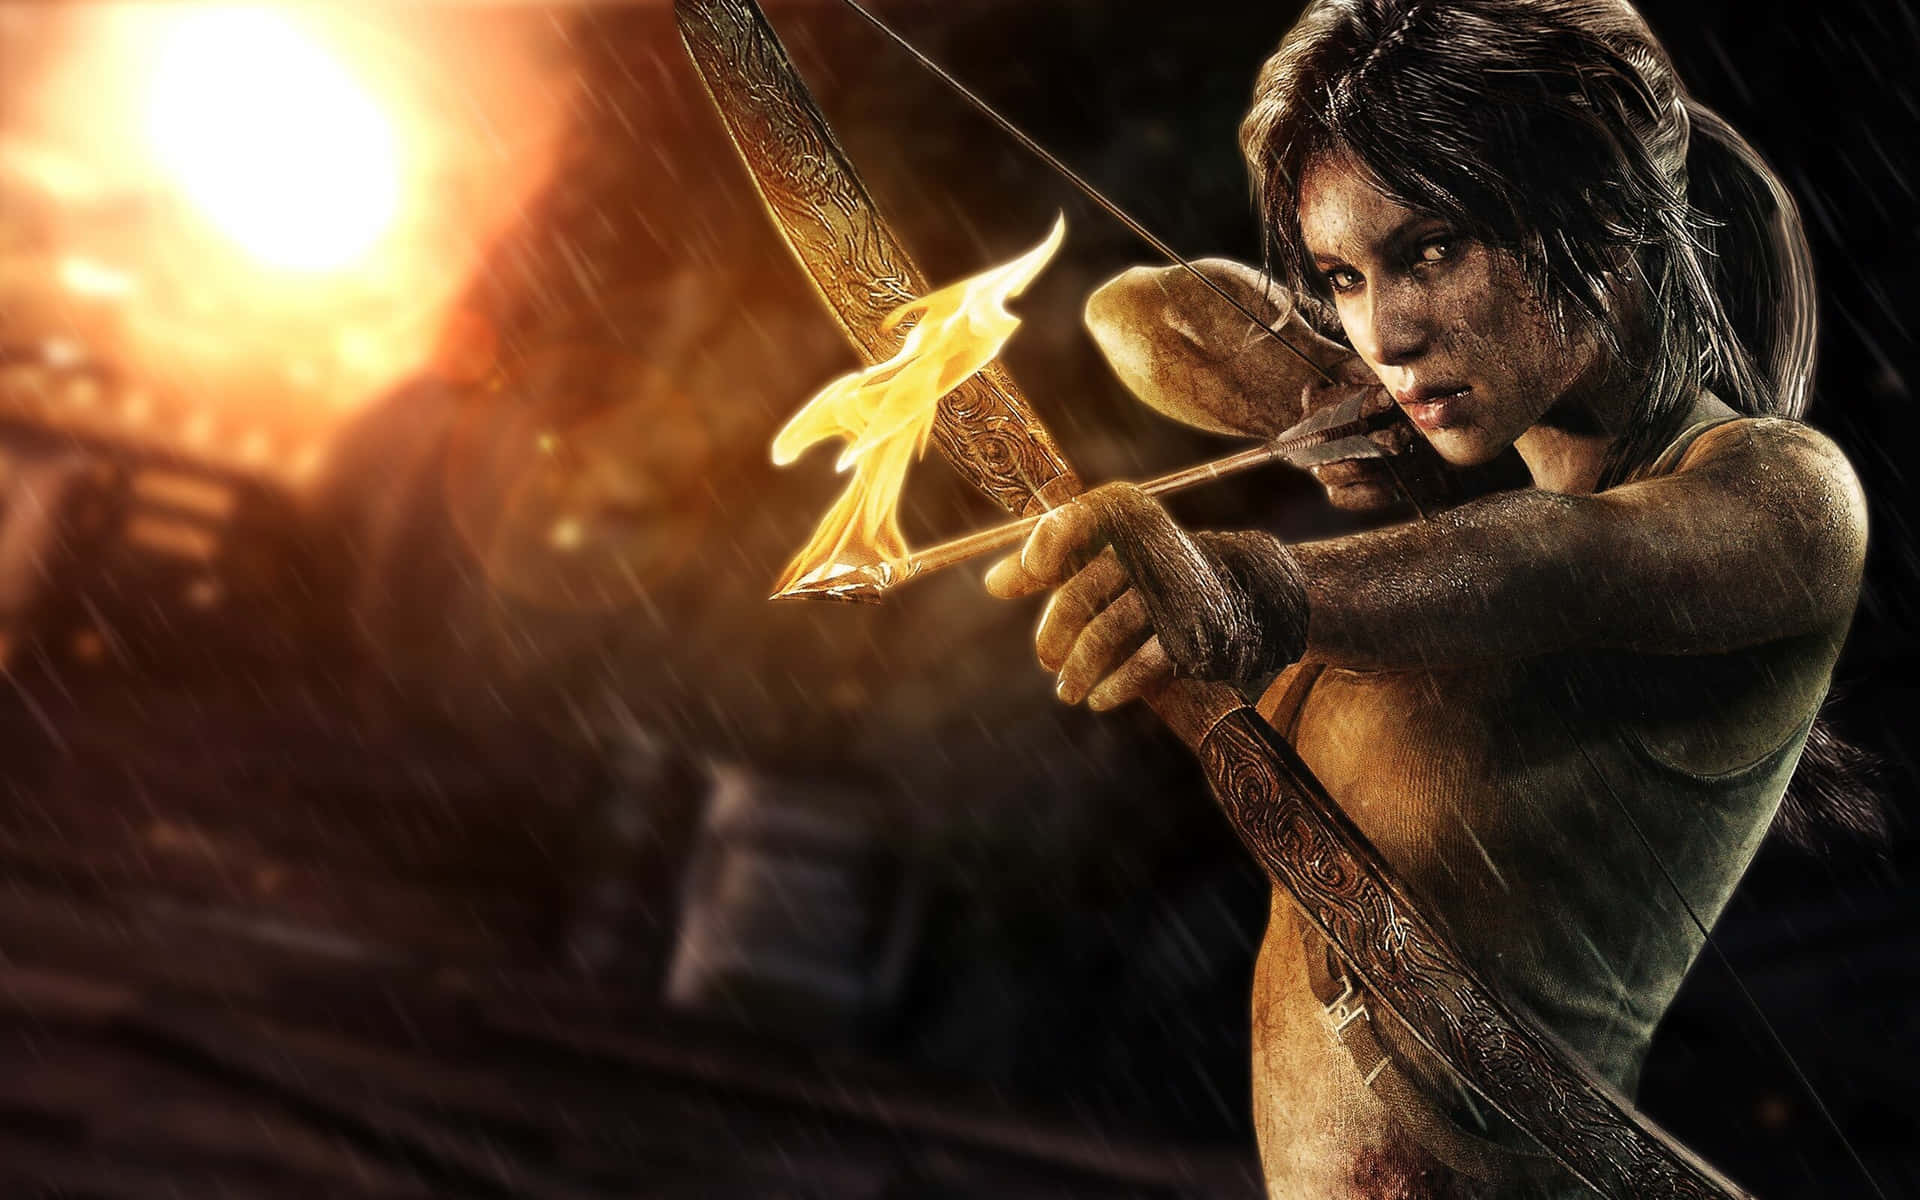 Lara Croft Armedwith Bowand Arrow Wallpaper